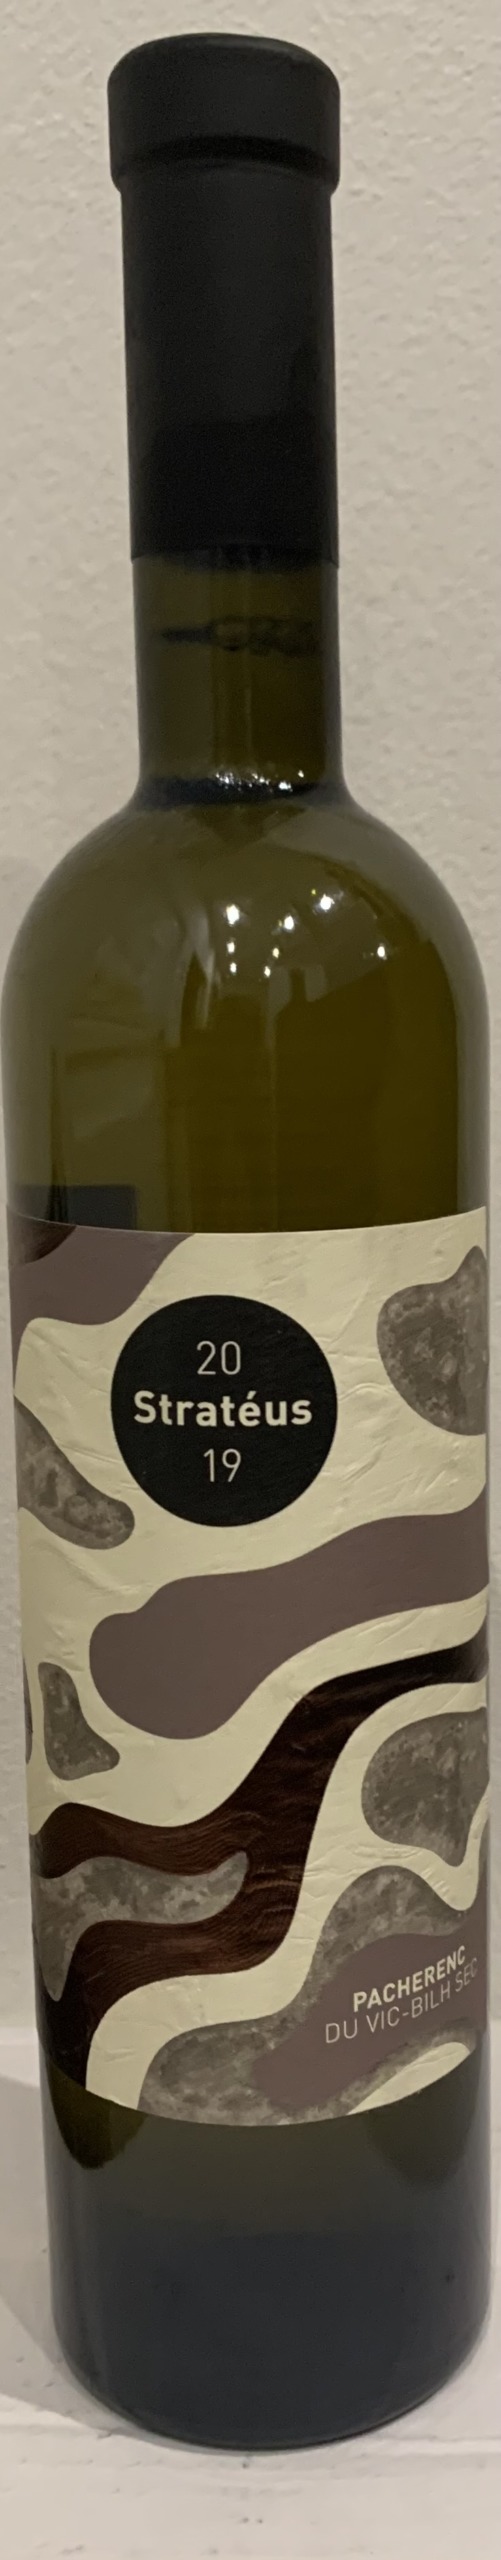 Vin blanc sec - Domaine Stratéus - 2019